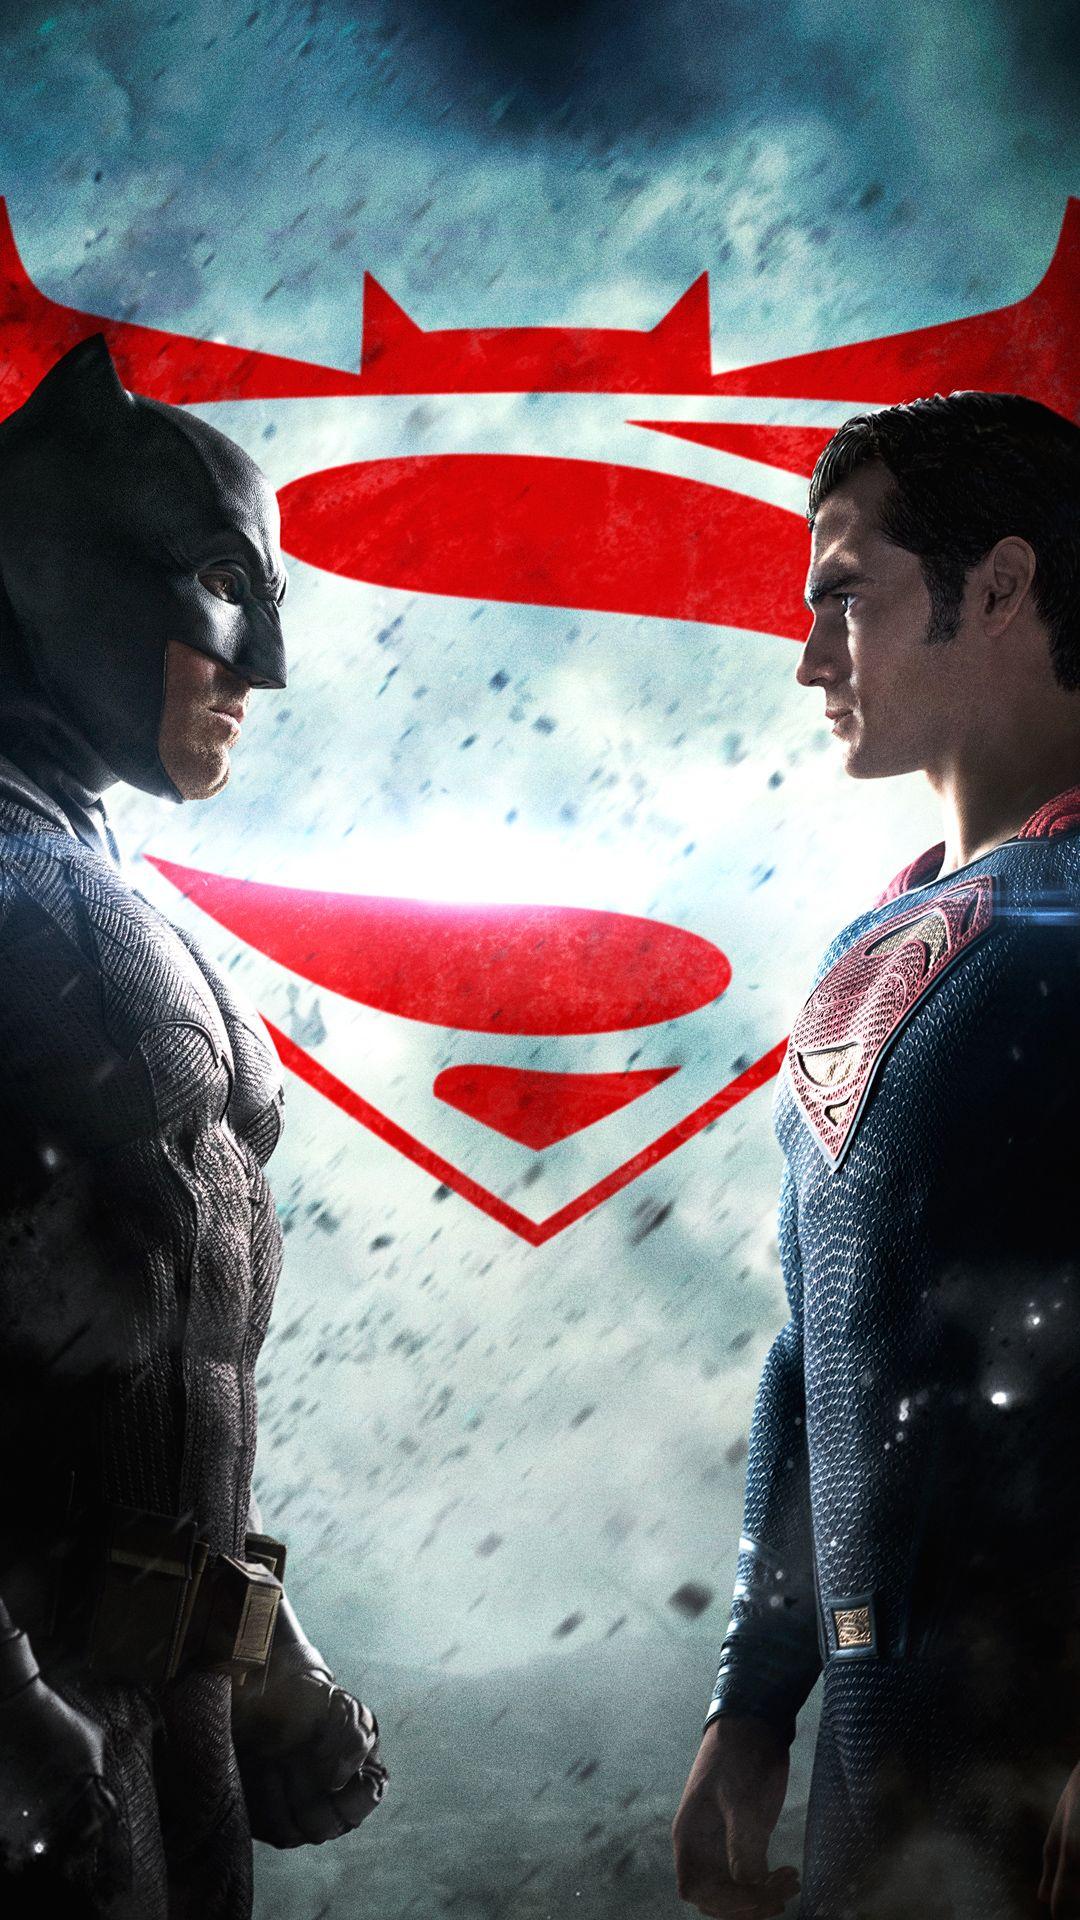 superman vs batman movie wallpaper